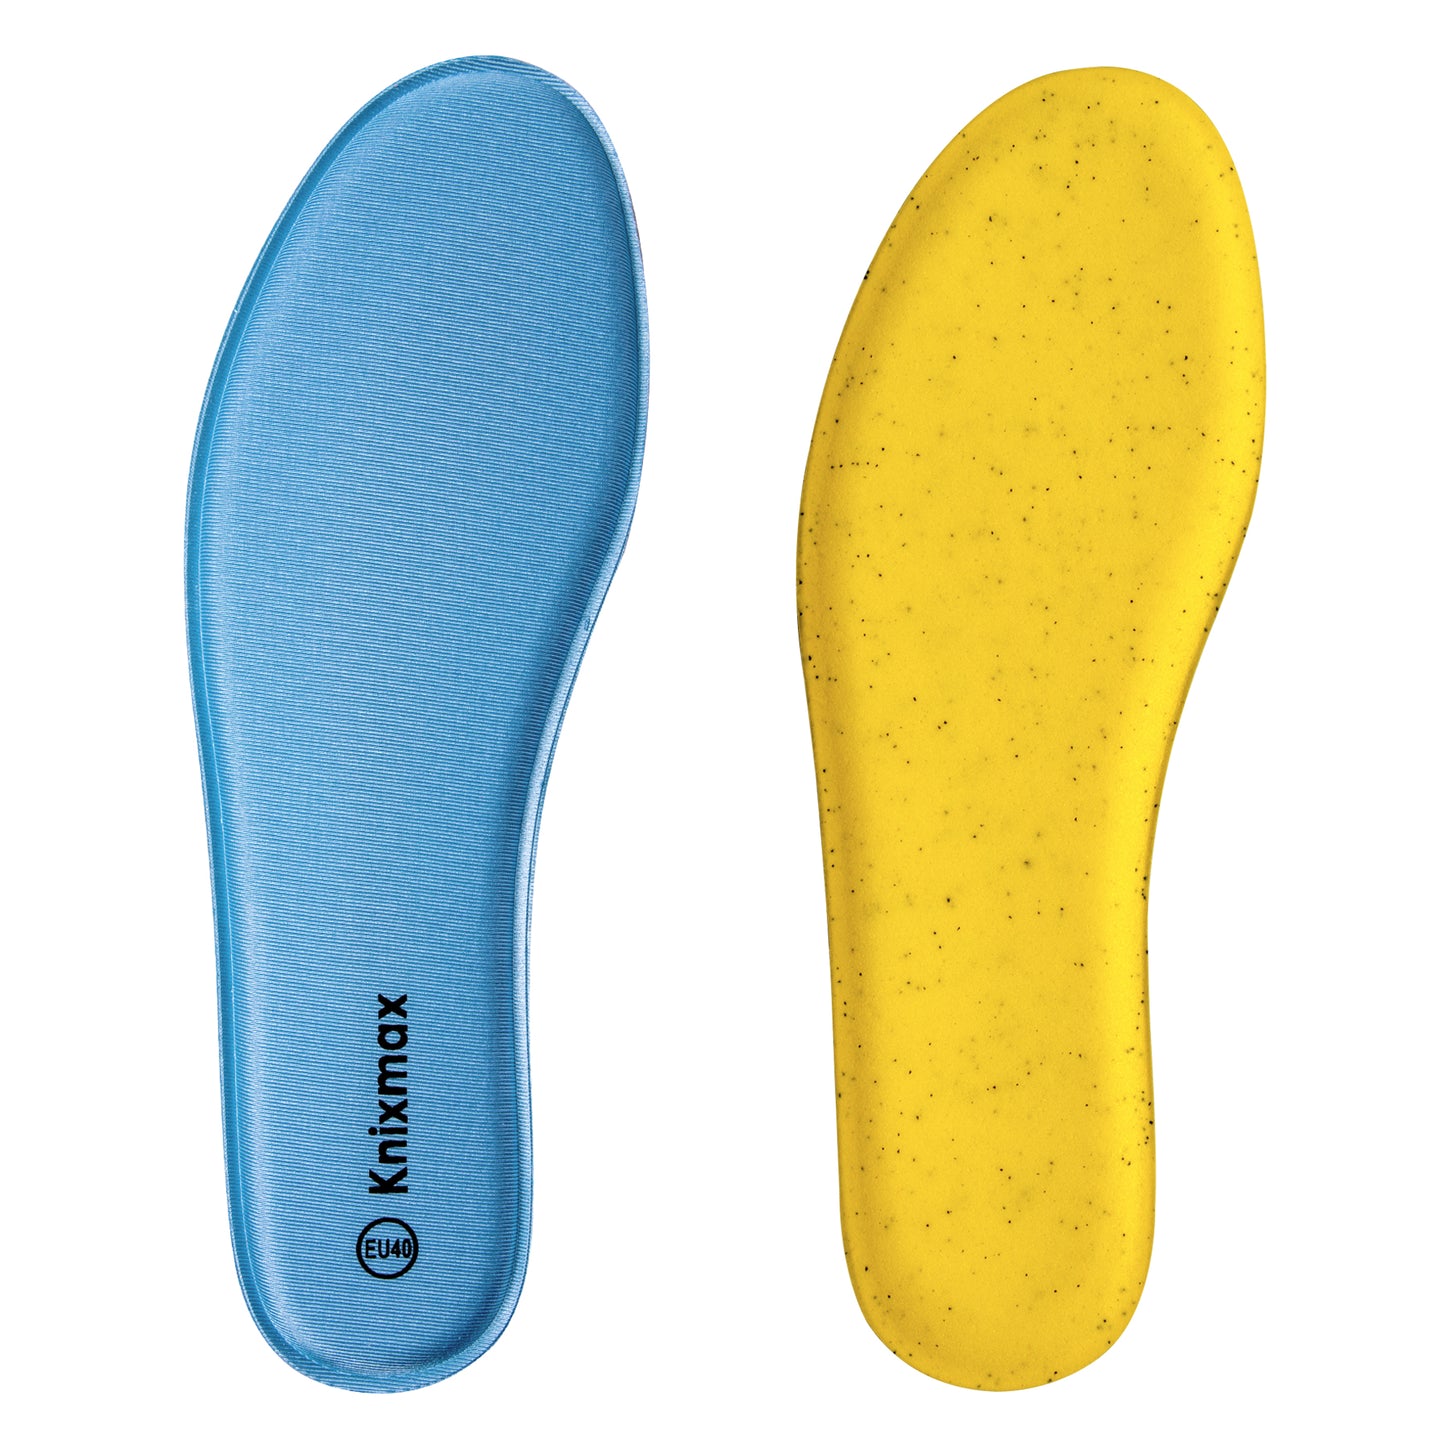 Knixmax Men & Women's Memory Foam Insoles, Blue, for Athletic Shoes & Sneakers